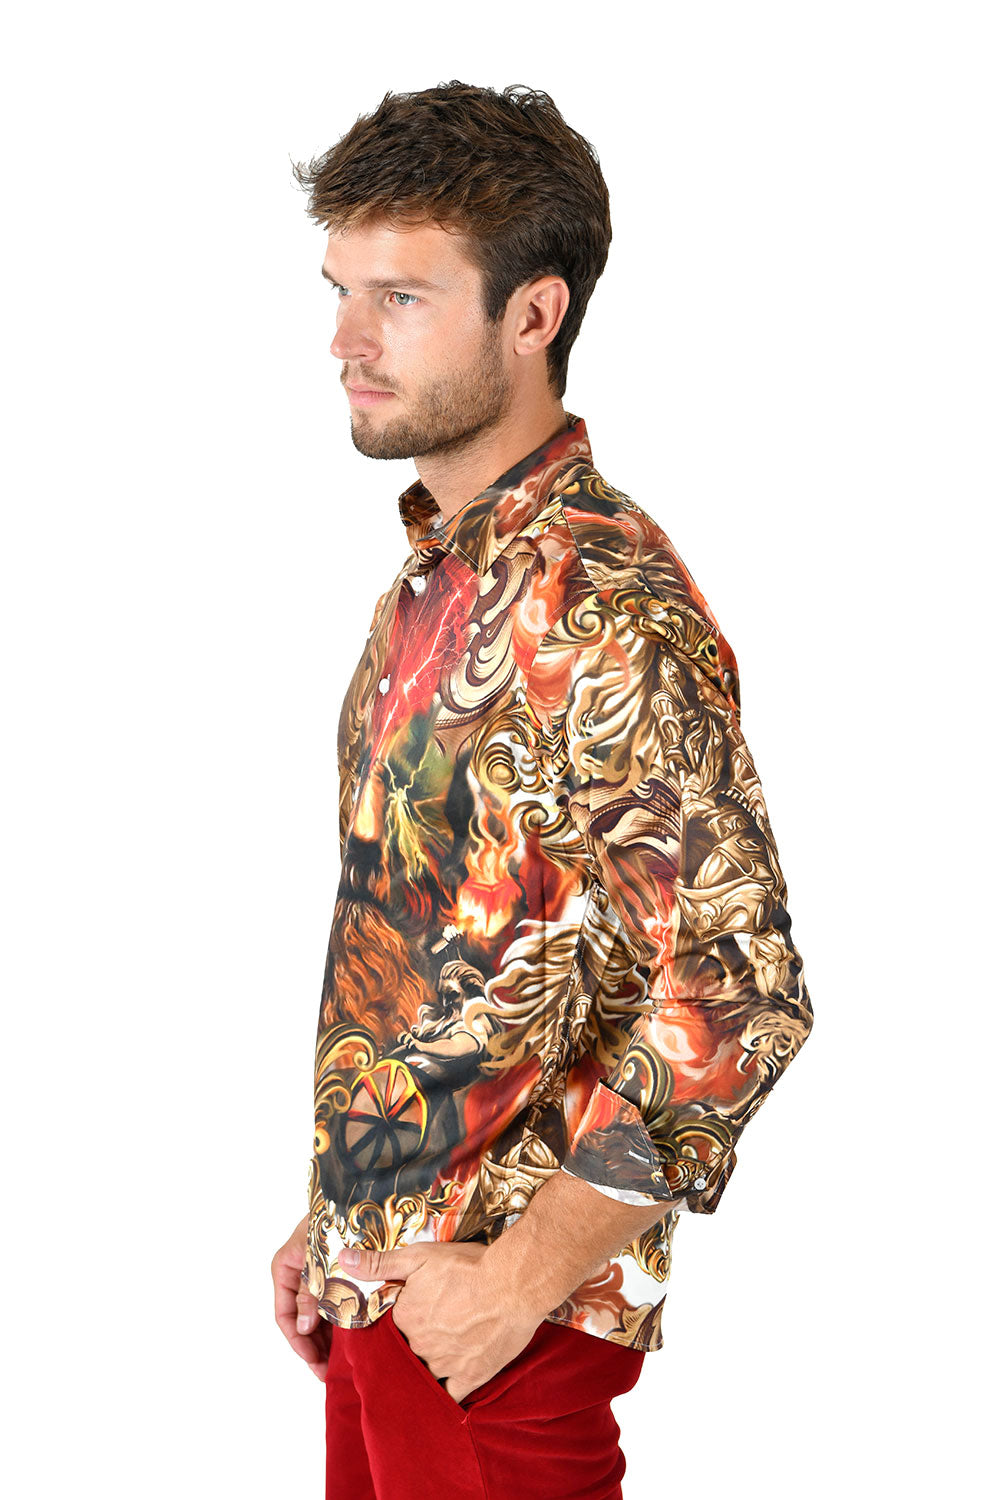 BARABAS Men's Luxury Printed Zeus Lightning Floral Button Shirts SP261